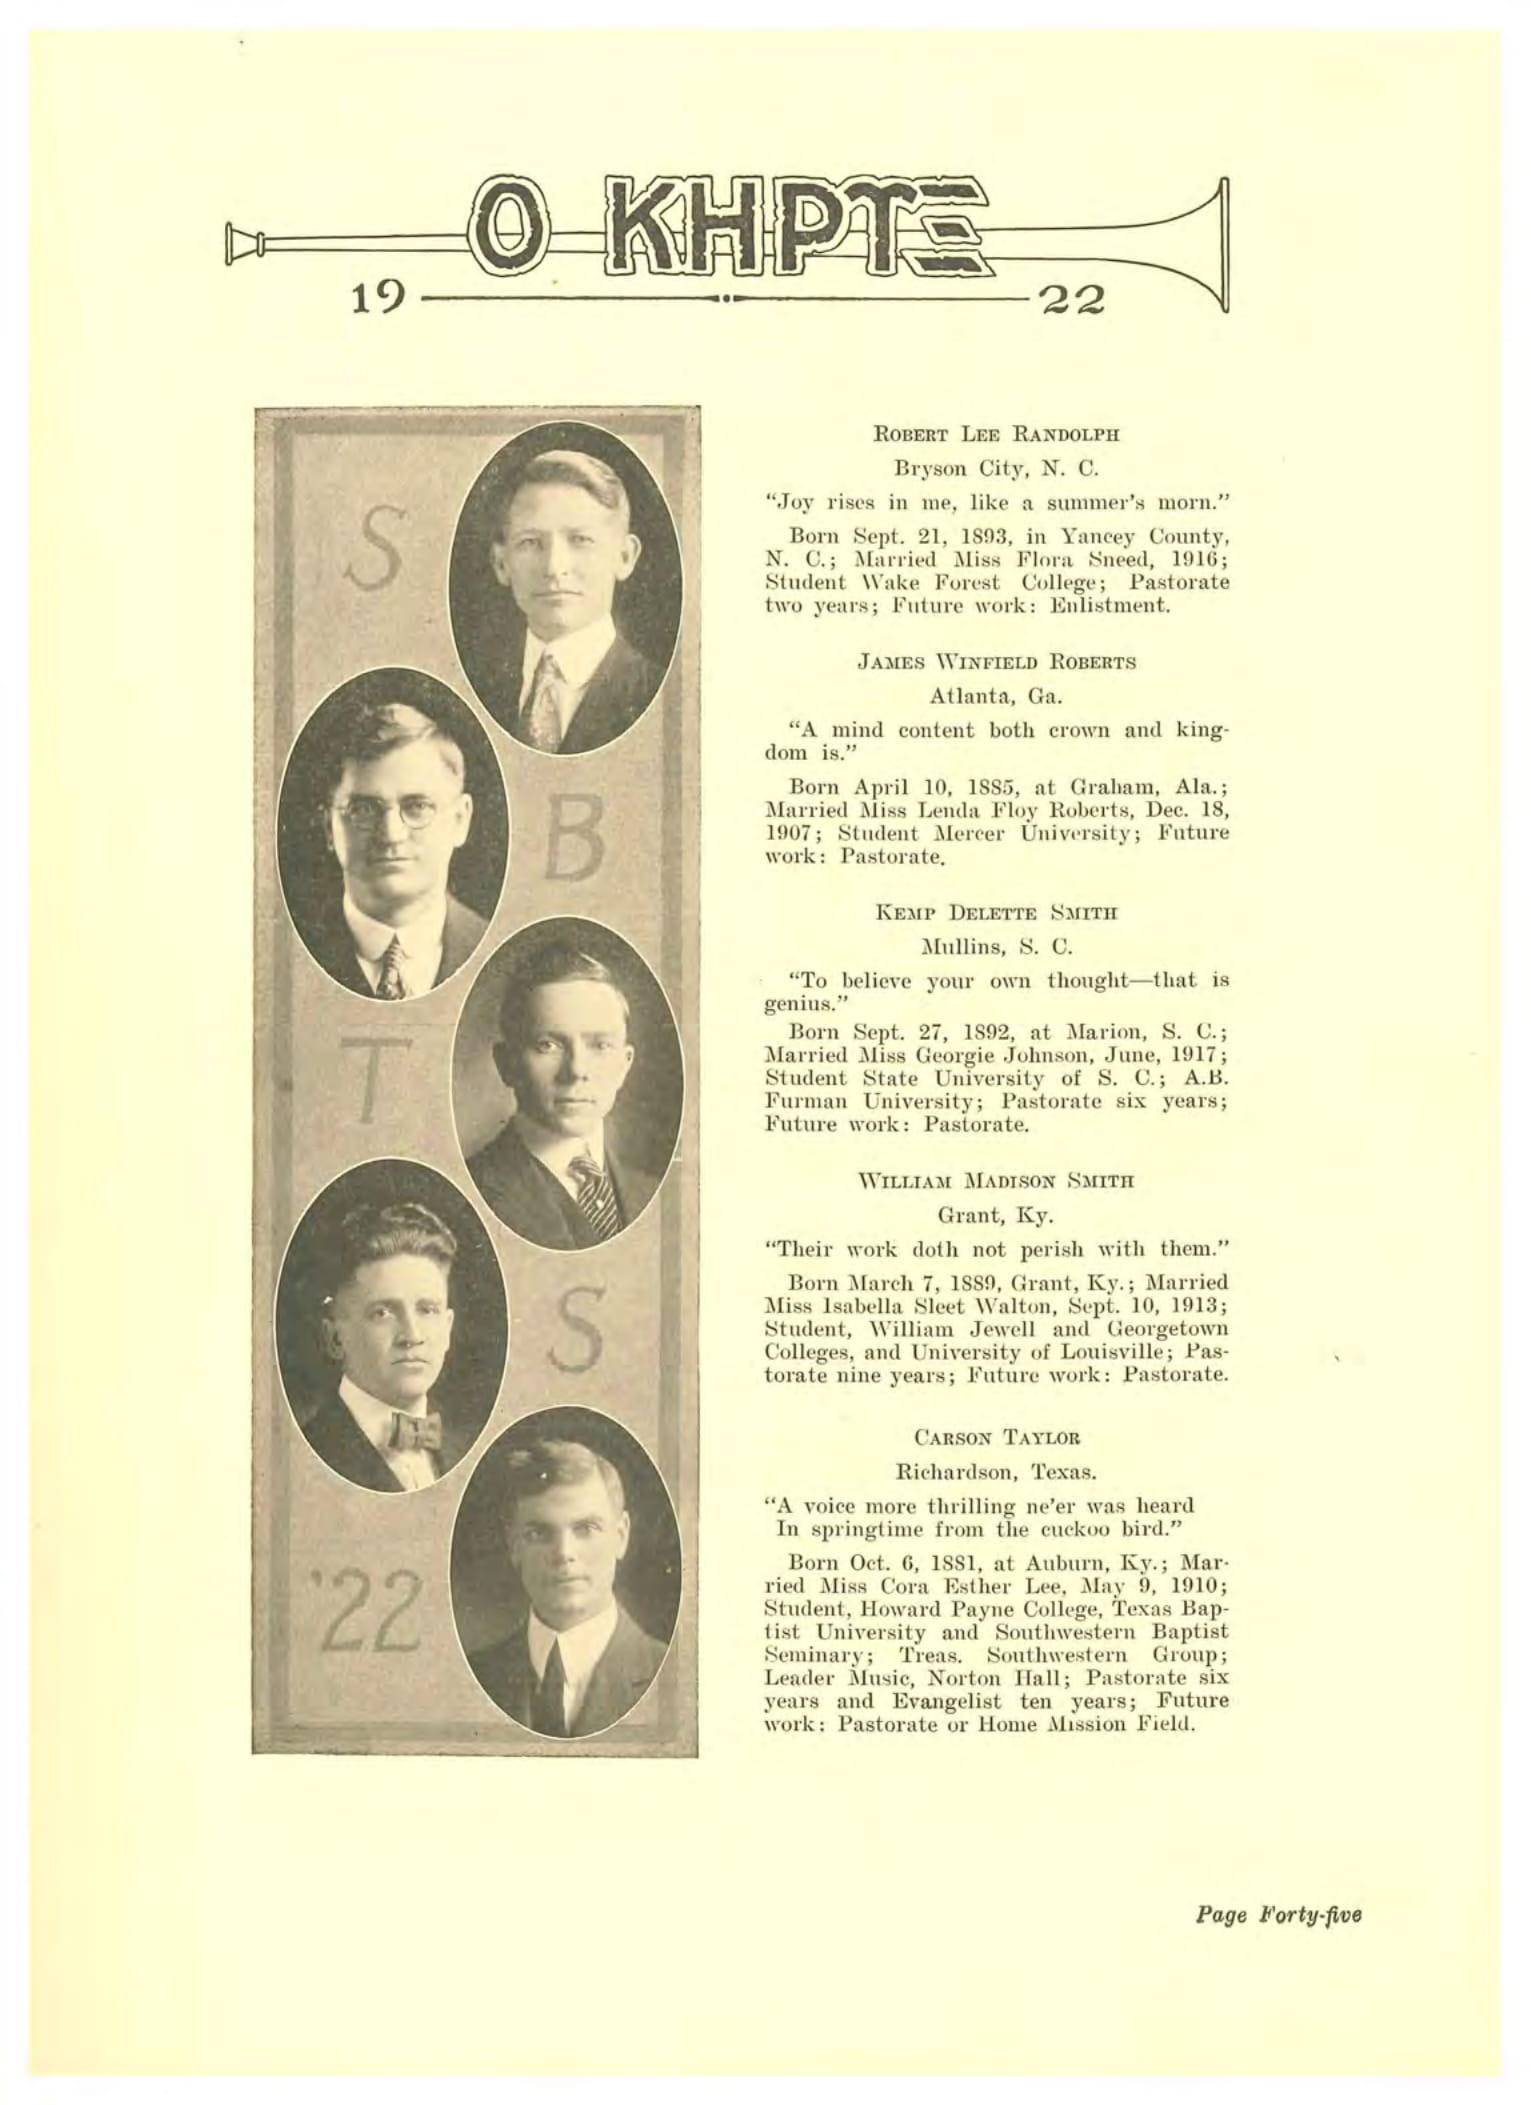 Southern Seminary annual (O Kerux) 1922-051.jpg